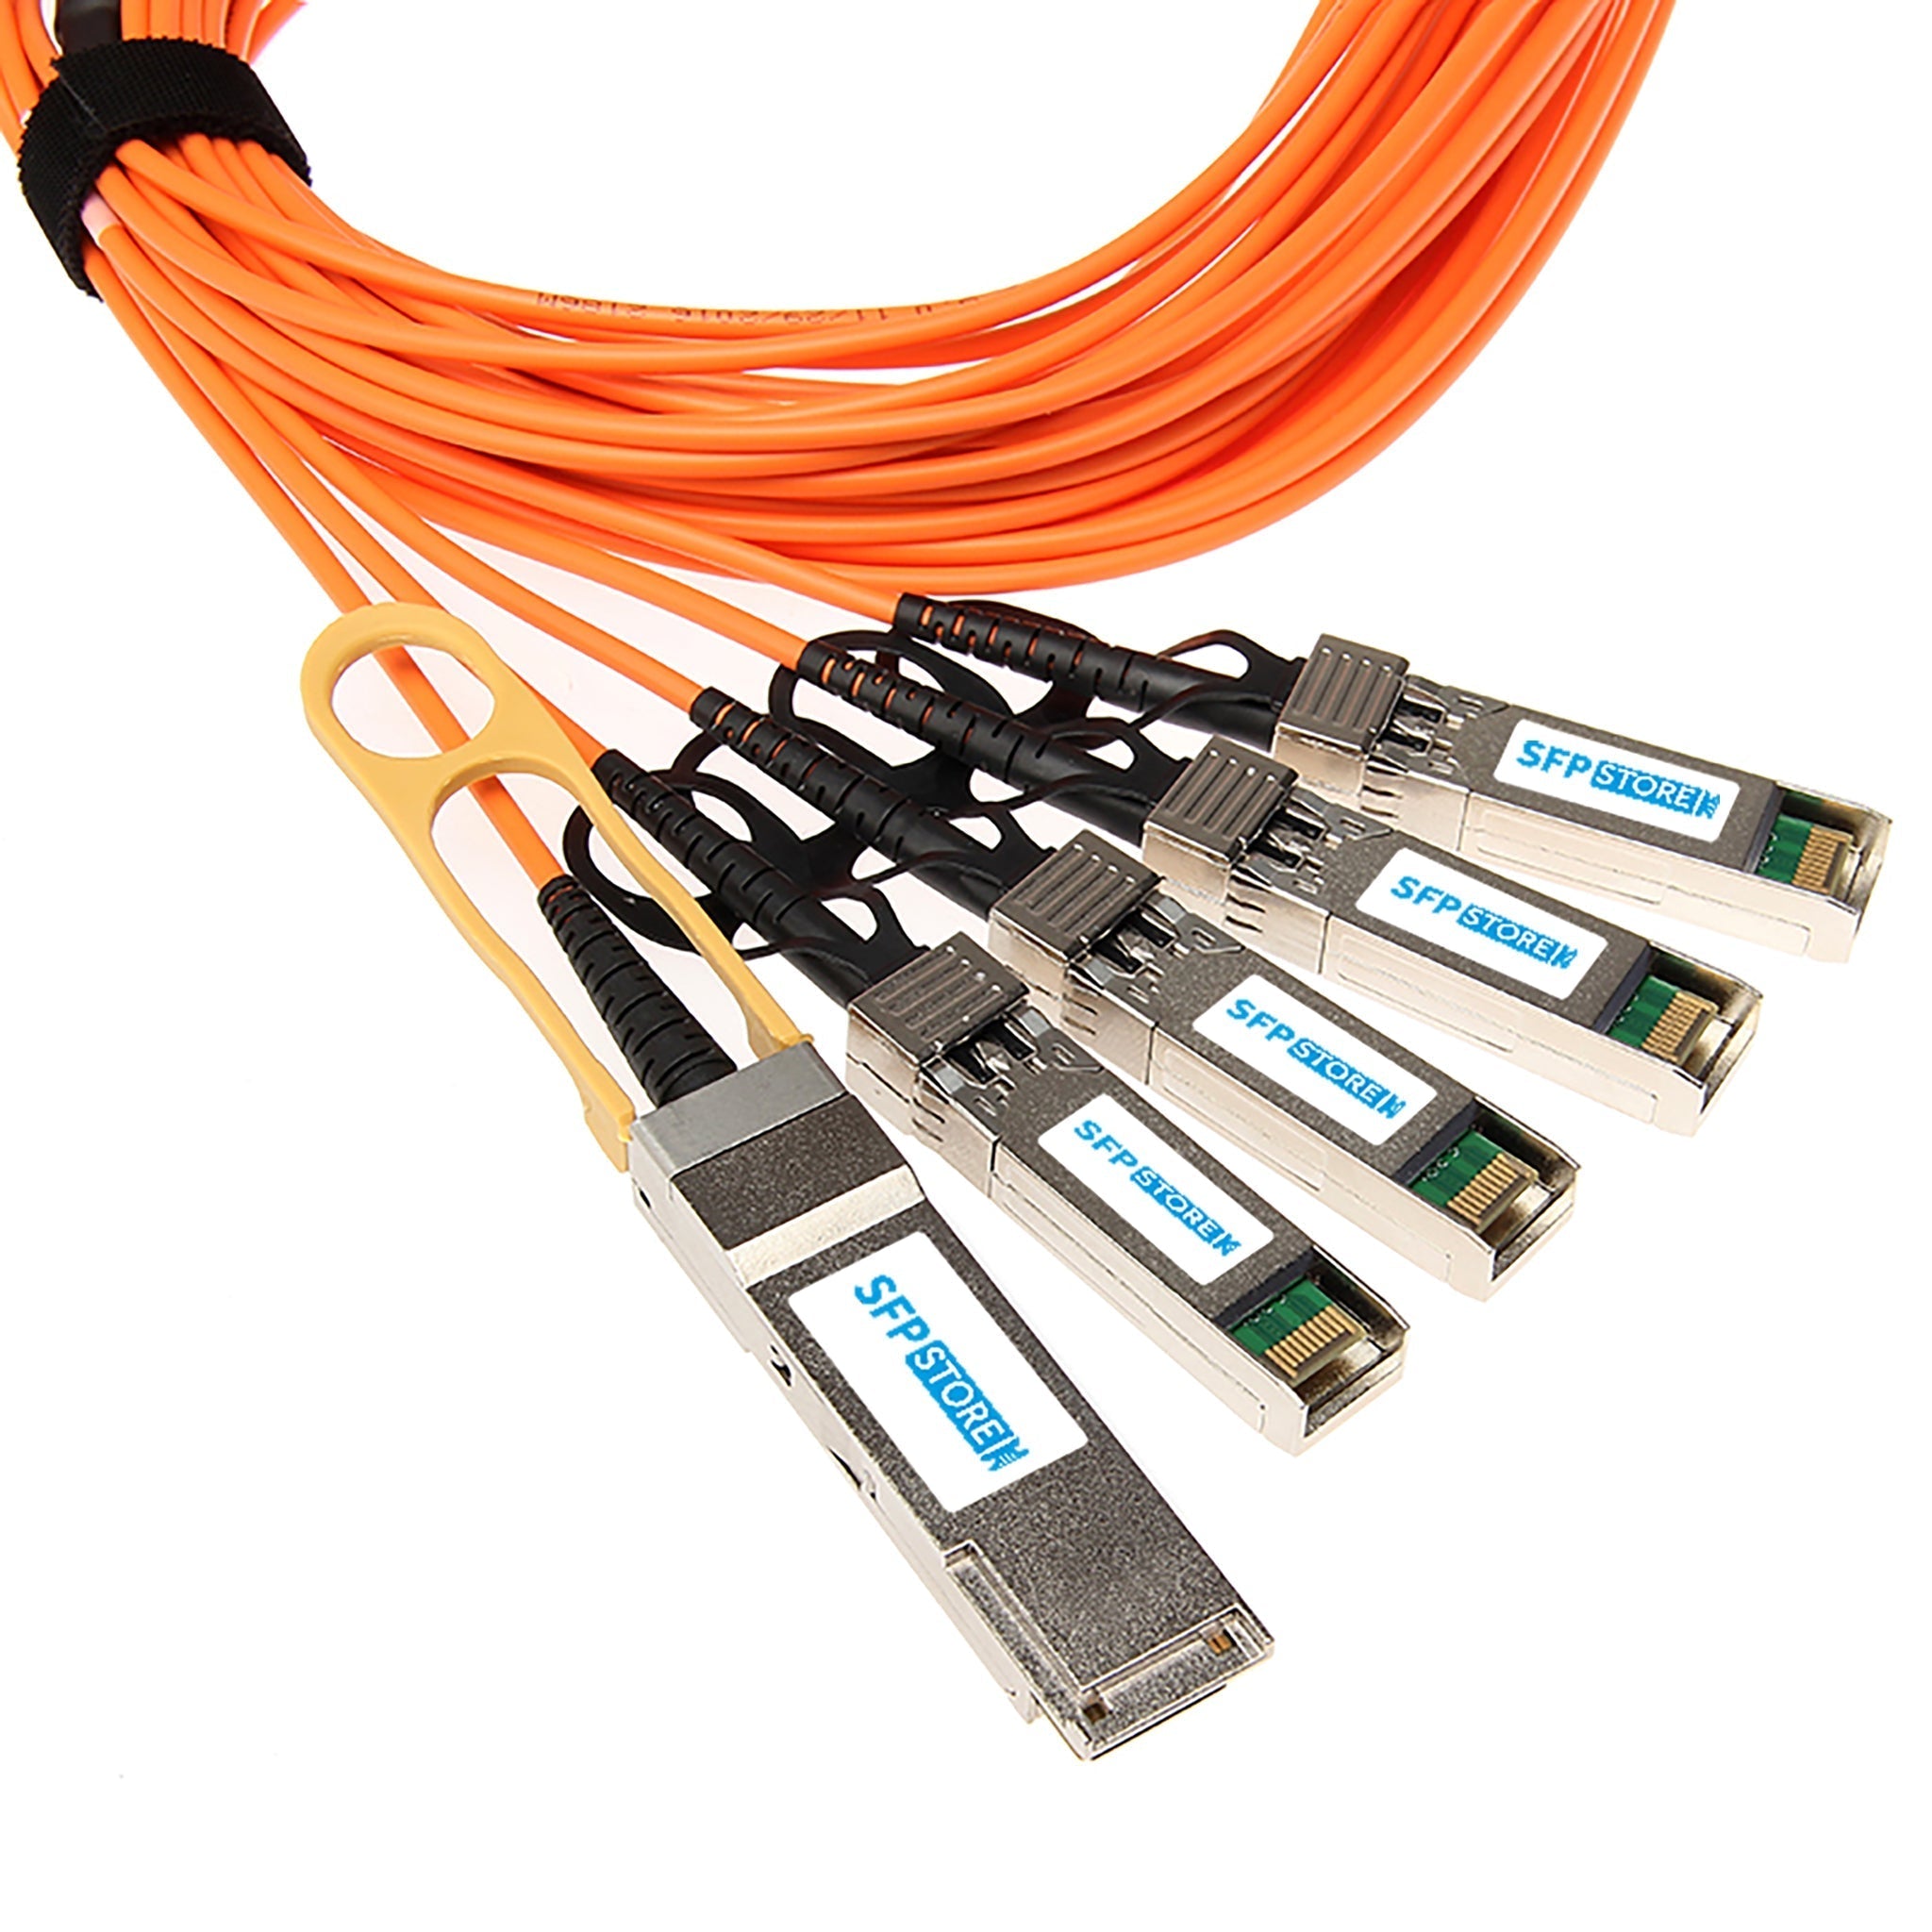 QSFP-4X10G-AOC7M-C - 7m Cisco Compatible 40G QSFP+ to 4 x 10G SFP+ Active Optical Cable